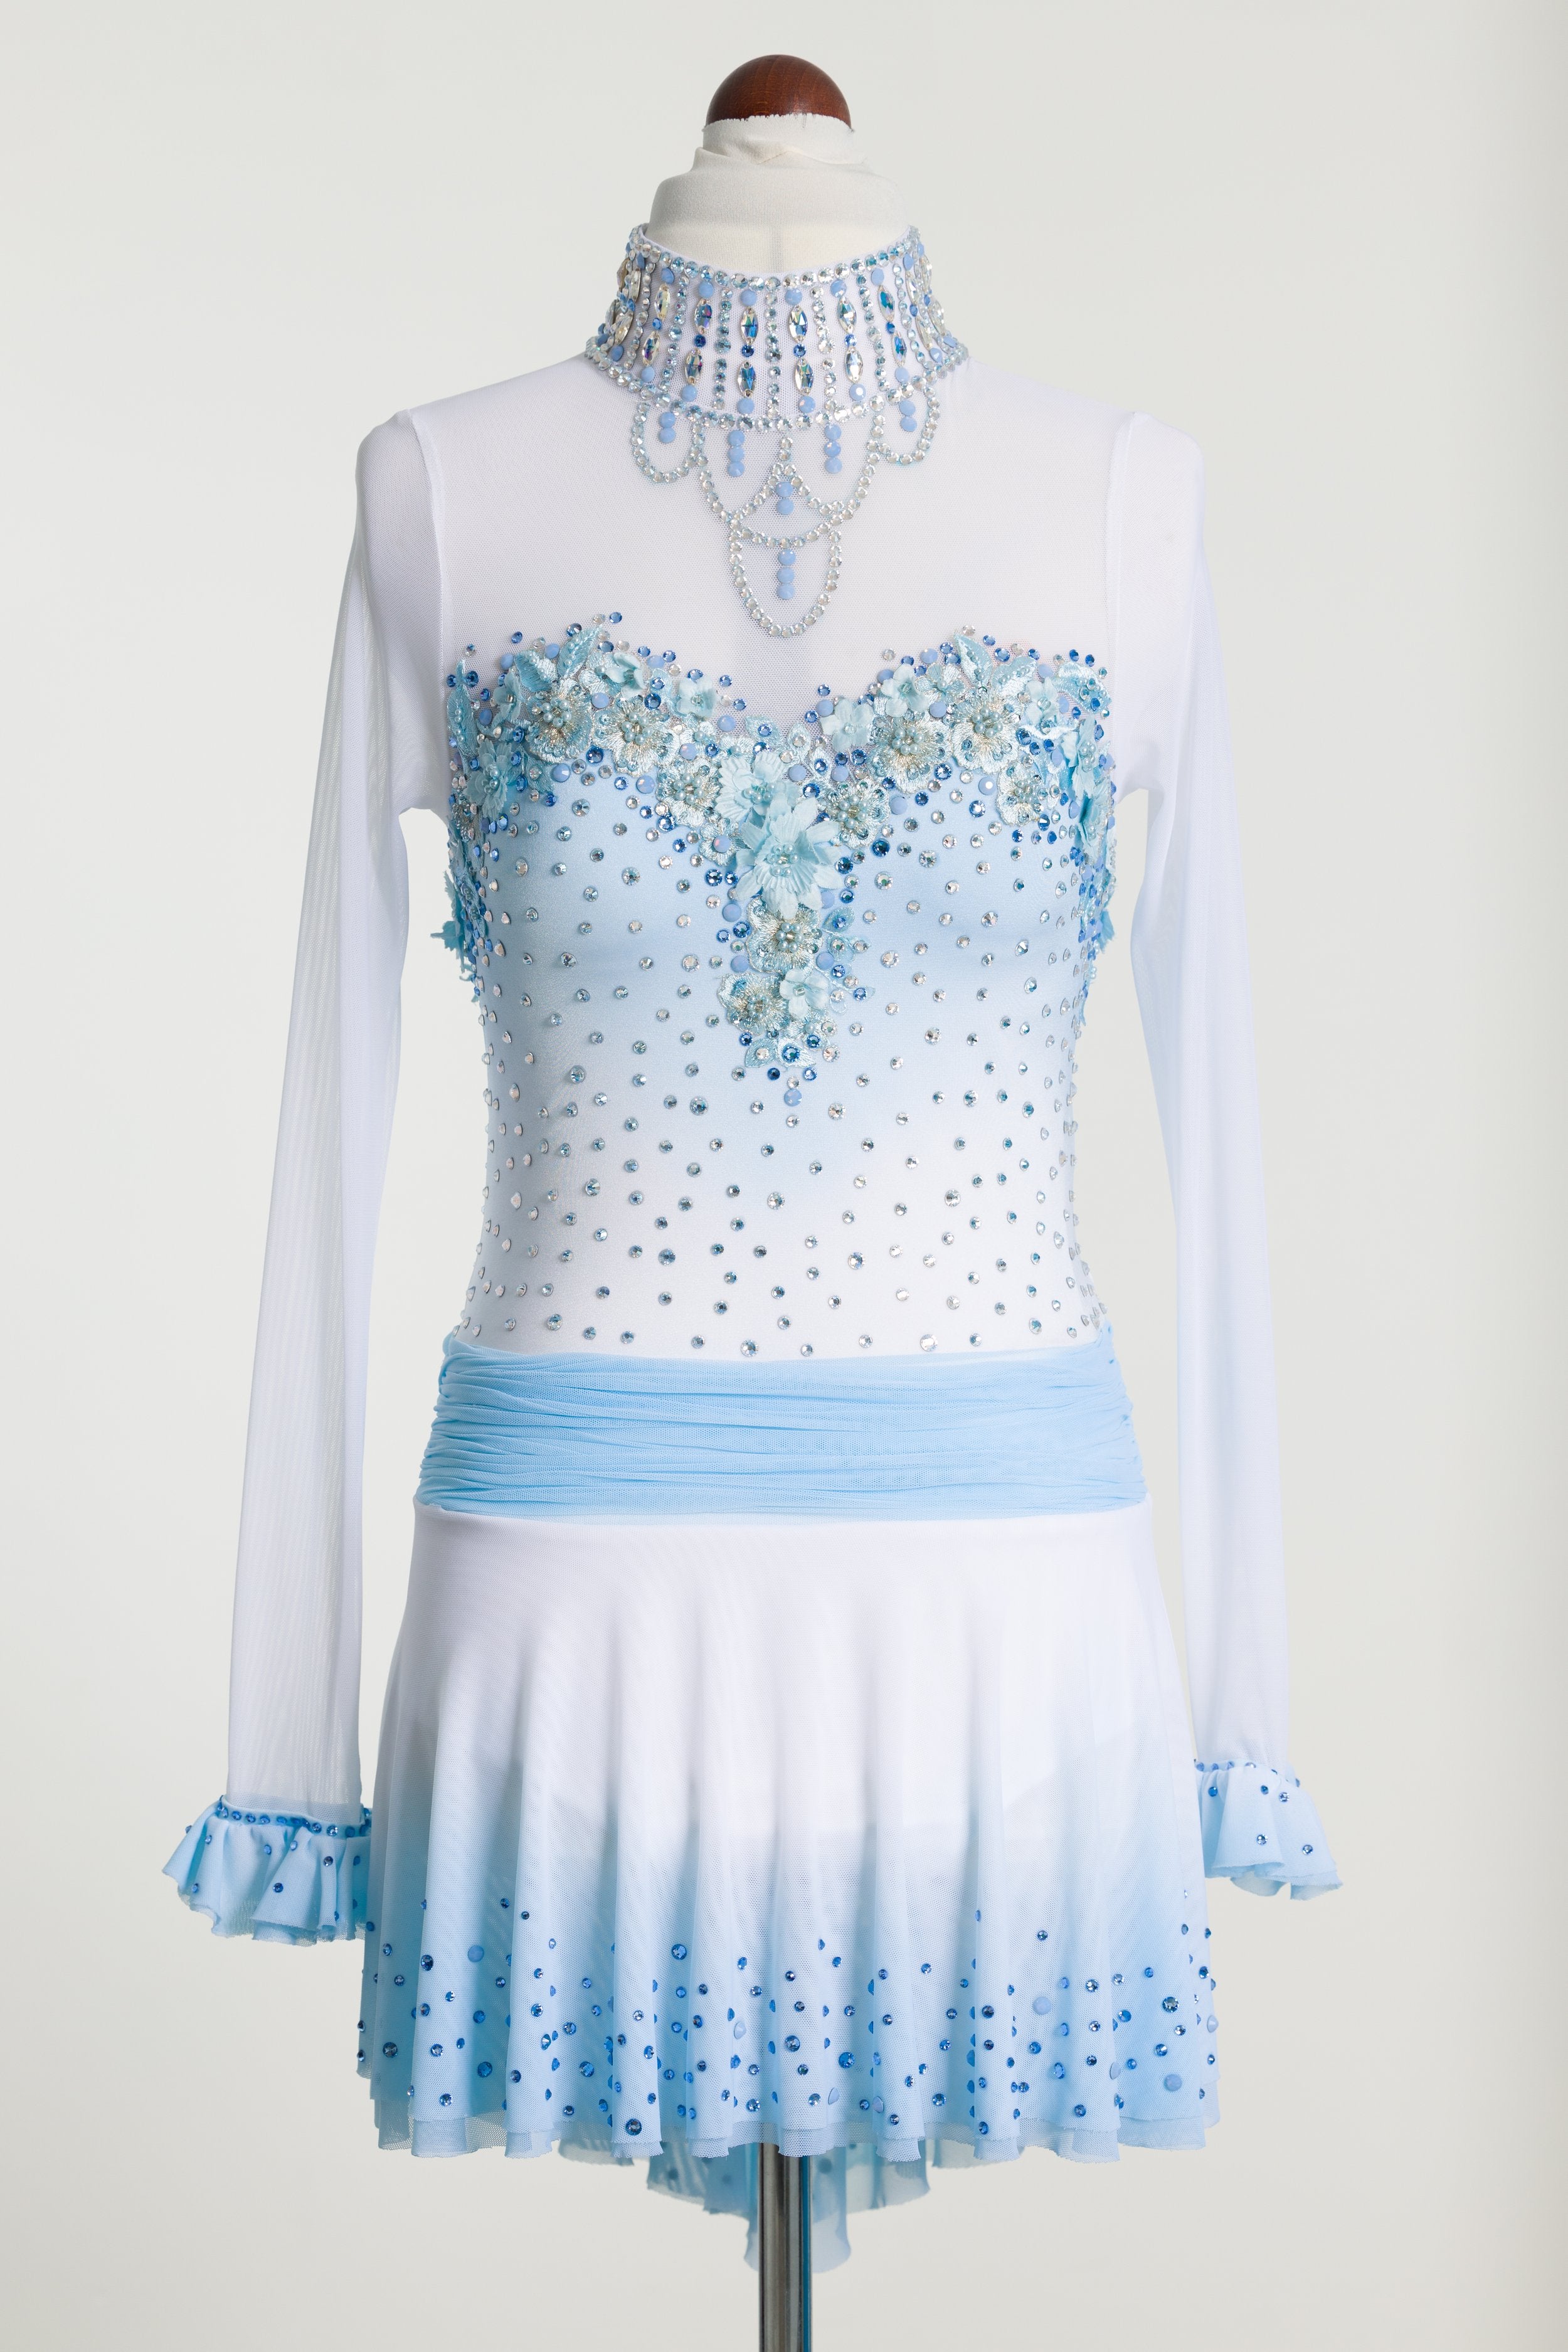 White and blue gradient snow princess dress